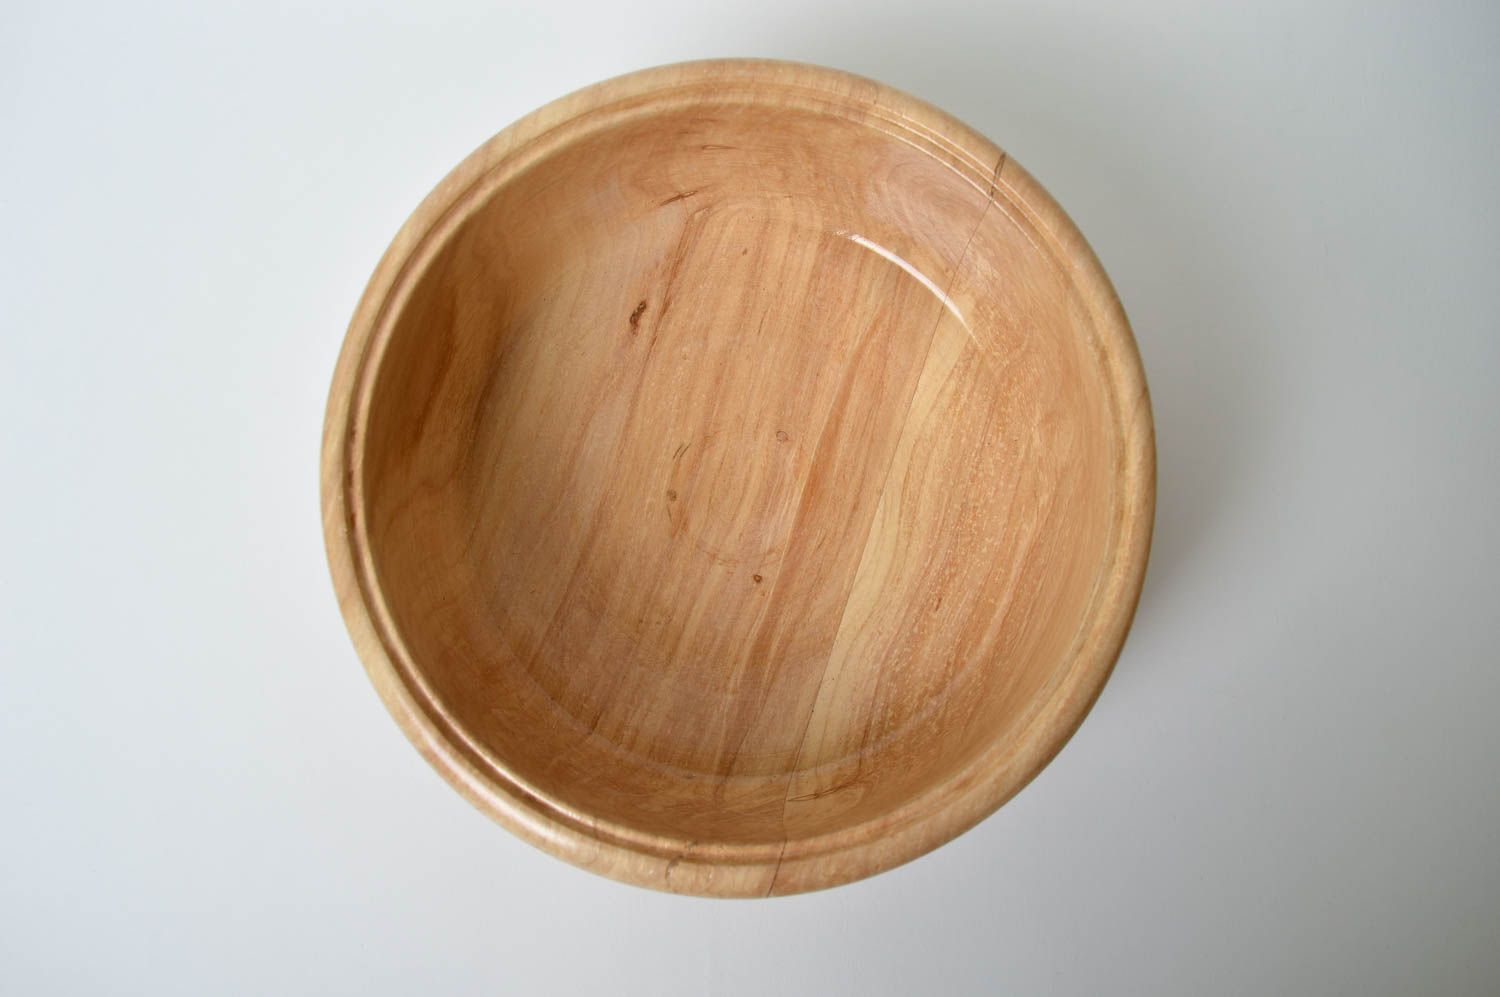 Handmade wooden bowl candy bowl design wood craft kitchen supplies ideas photo 4